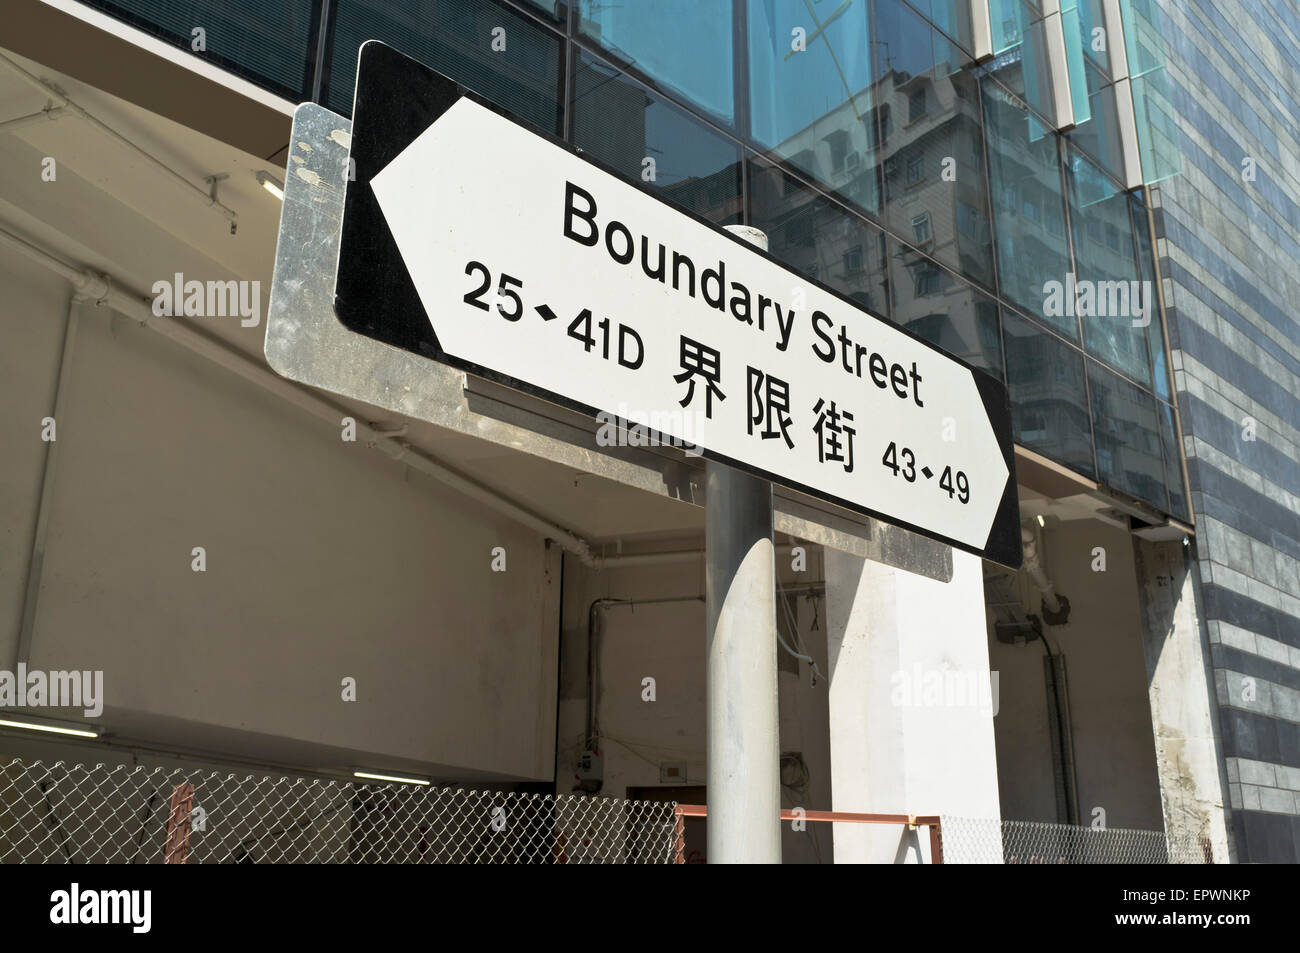 dh Boundary Street SHAM SHUI PO HONG KONG Old Kowloon boundary street sign Stock Photo